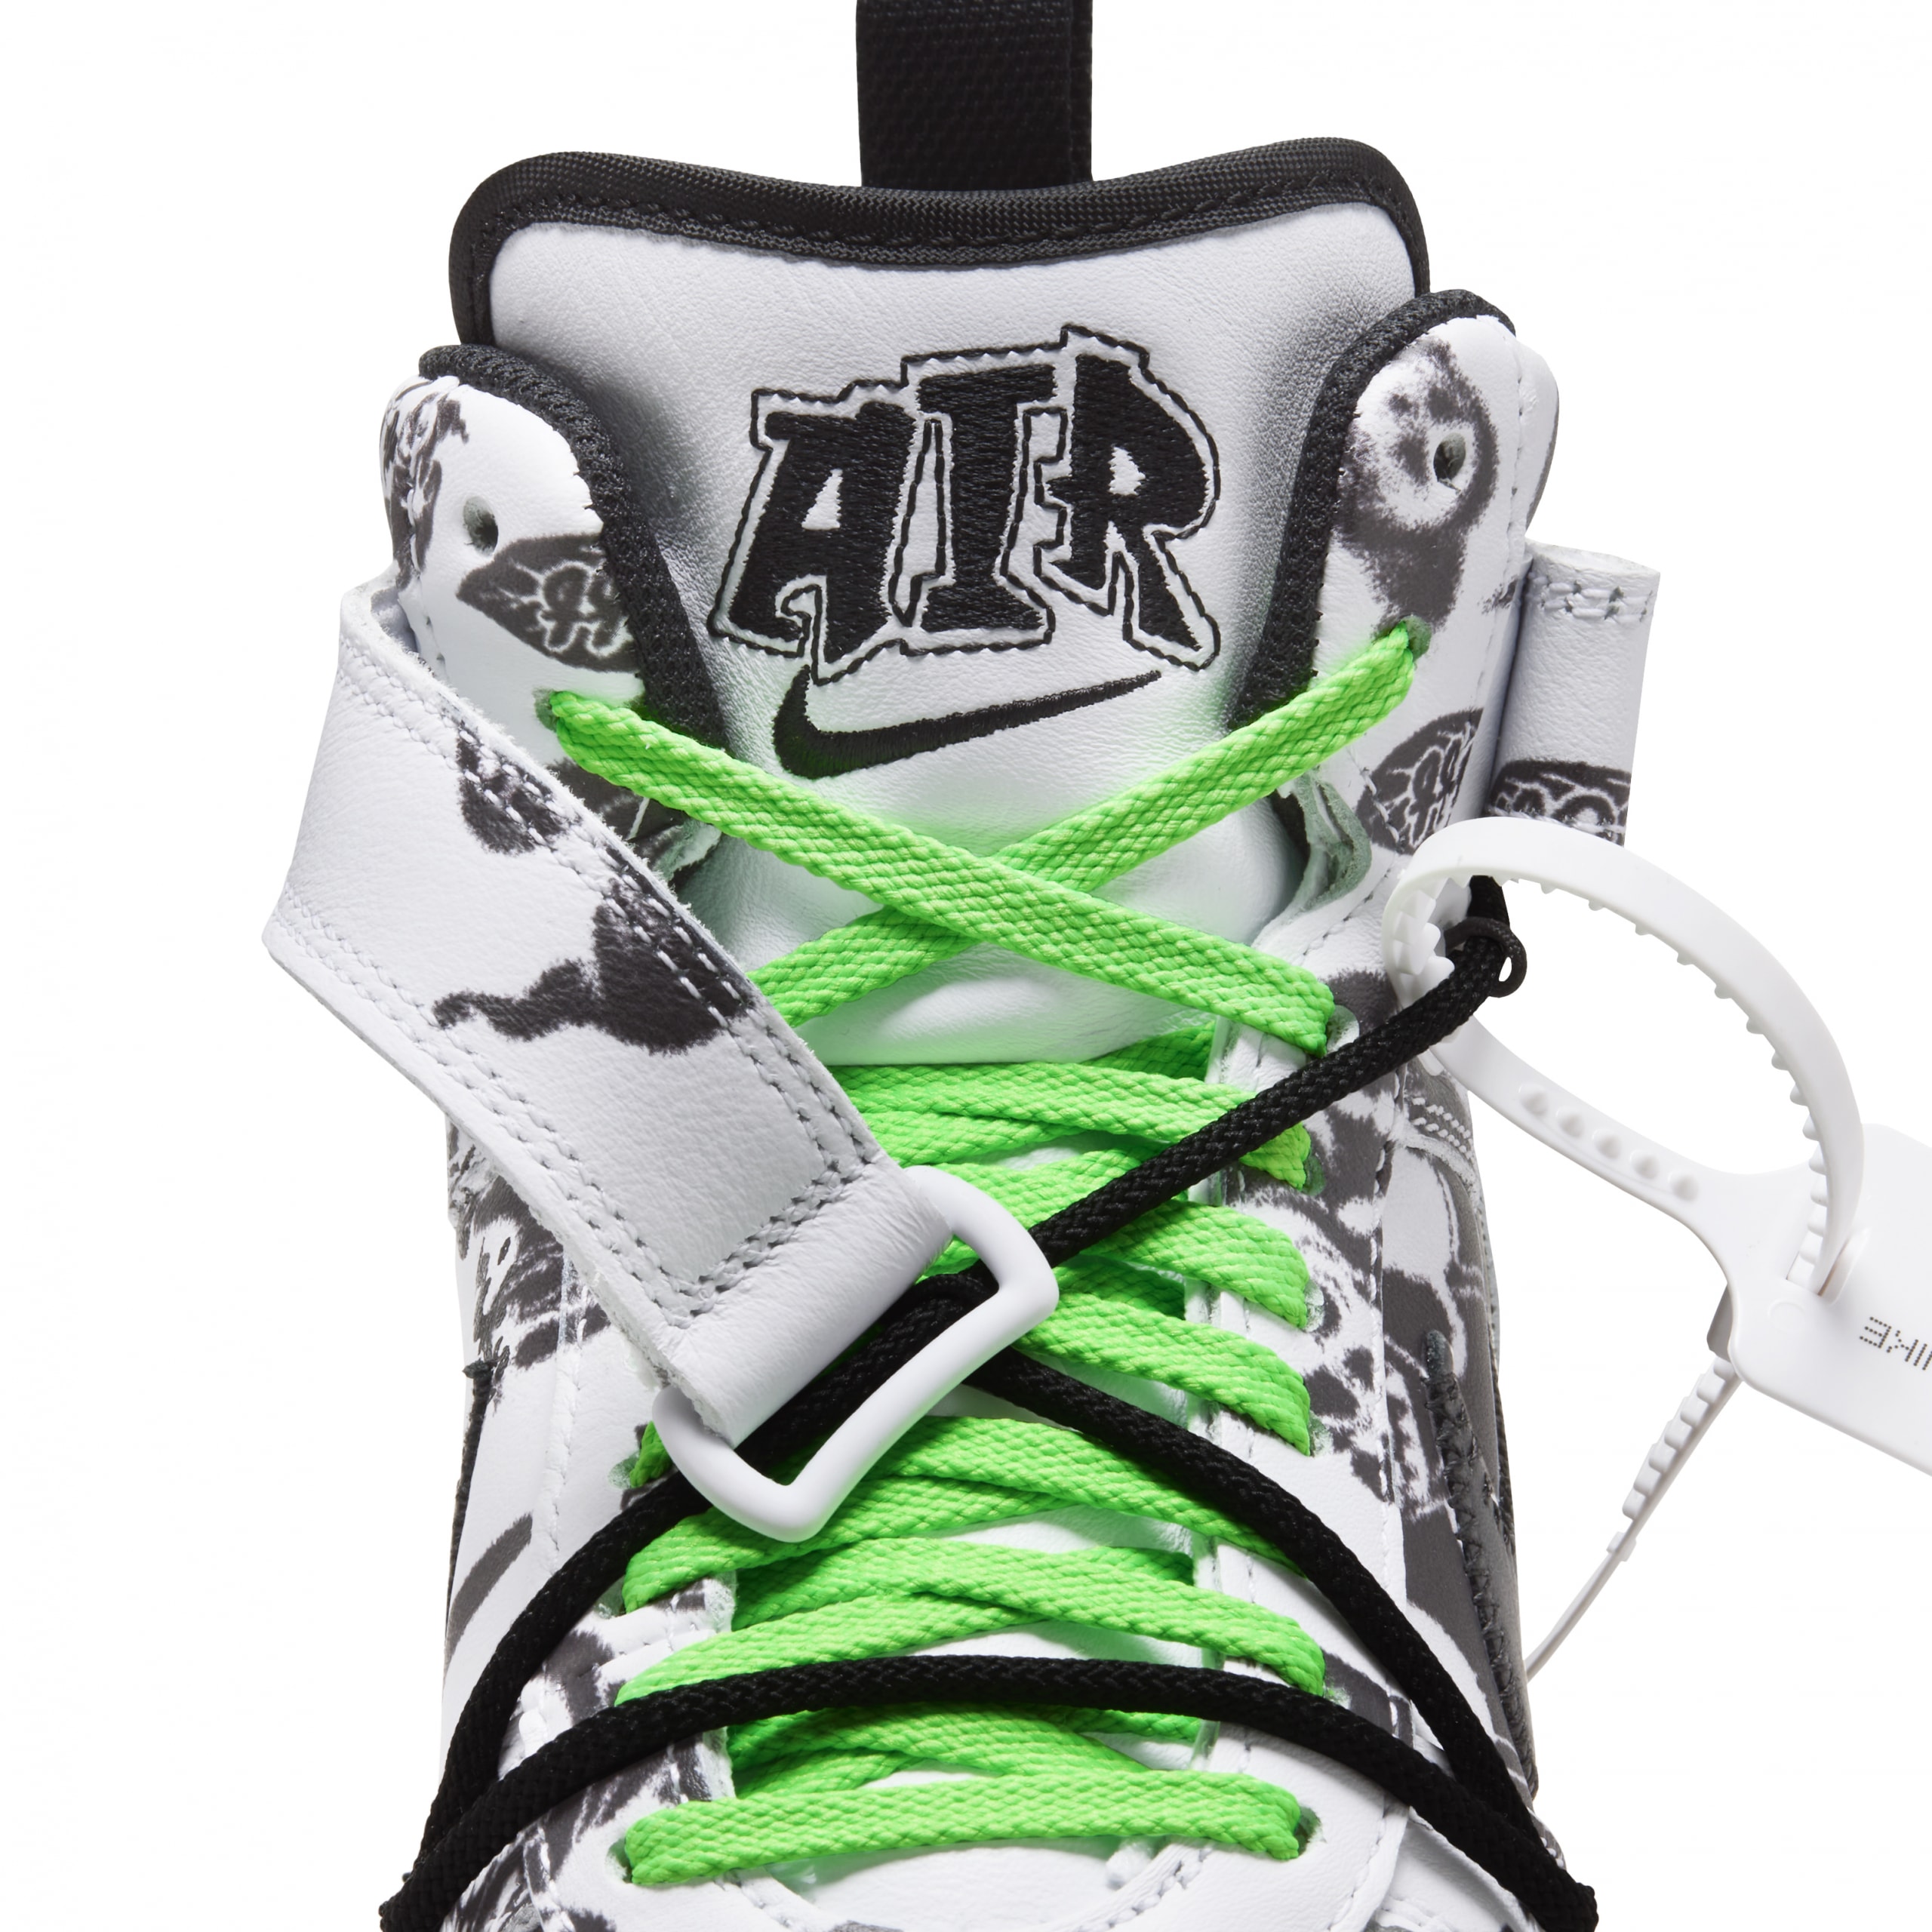 Off-White™ 再度携手 Nike 释出 AF1 Mid 全新联名鞋款